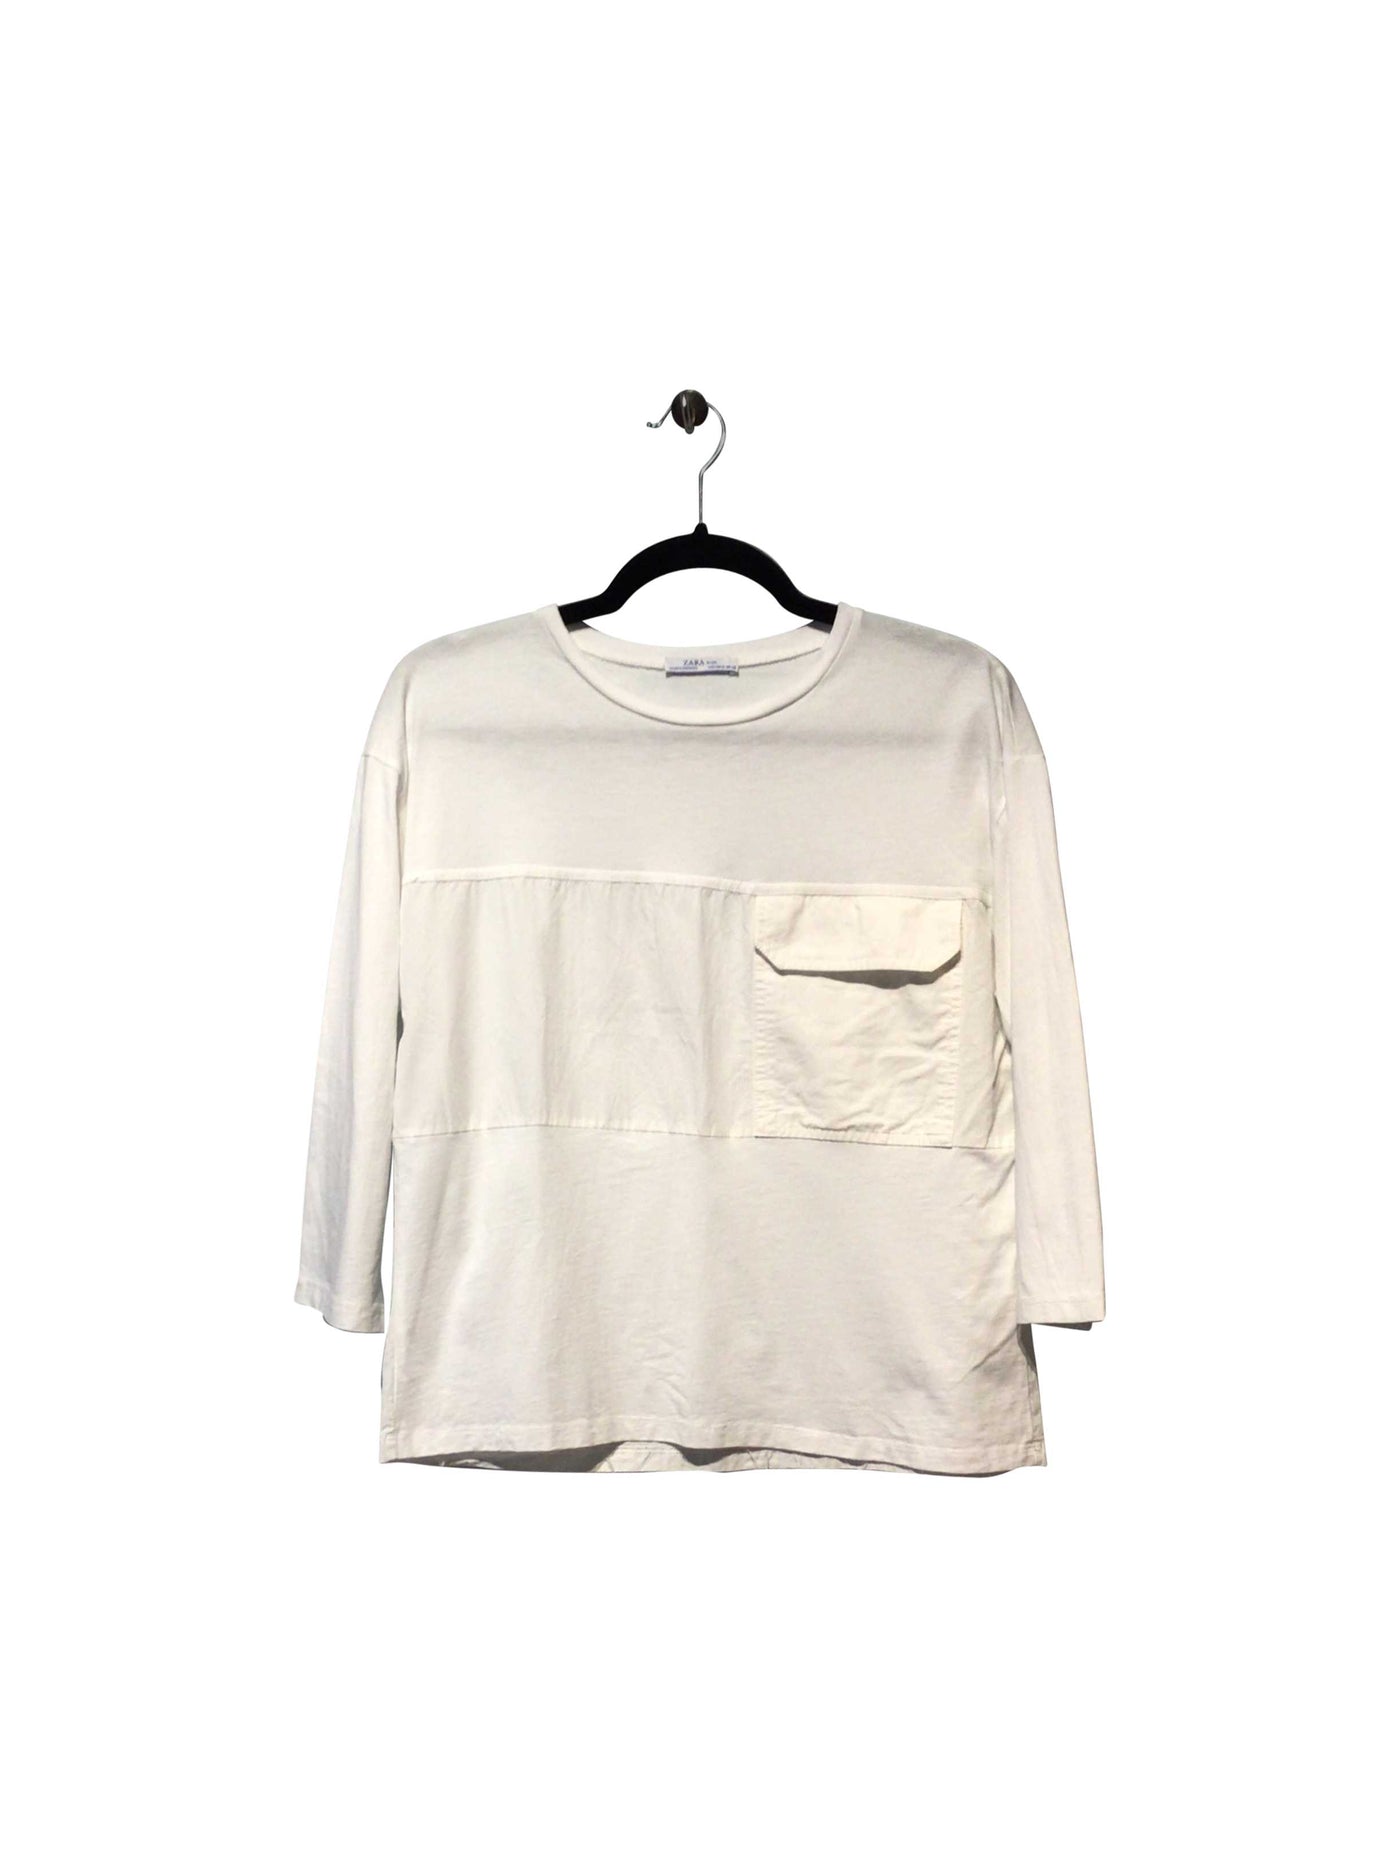 ZARA Regular fit T-shirt in White  -  2  14.25 Koop